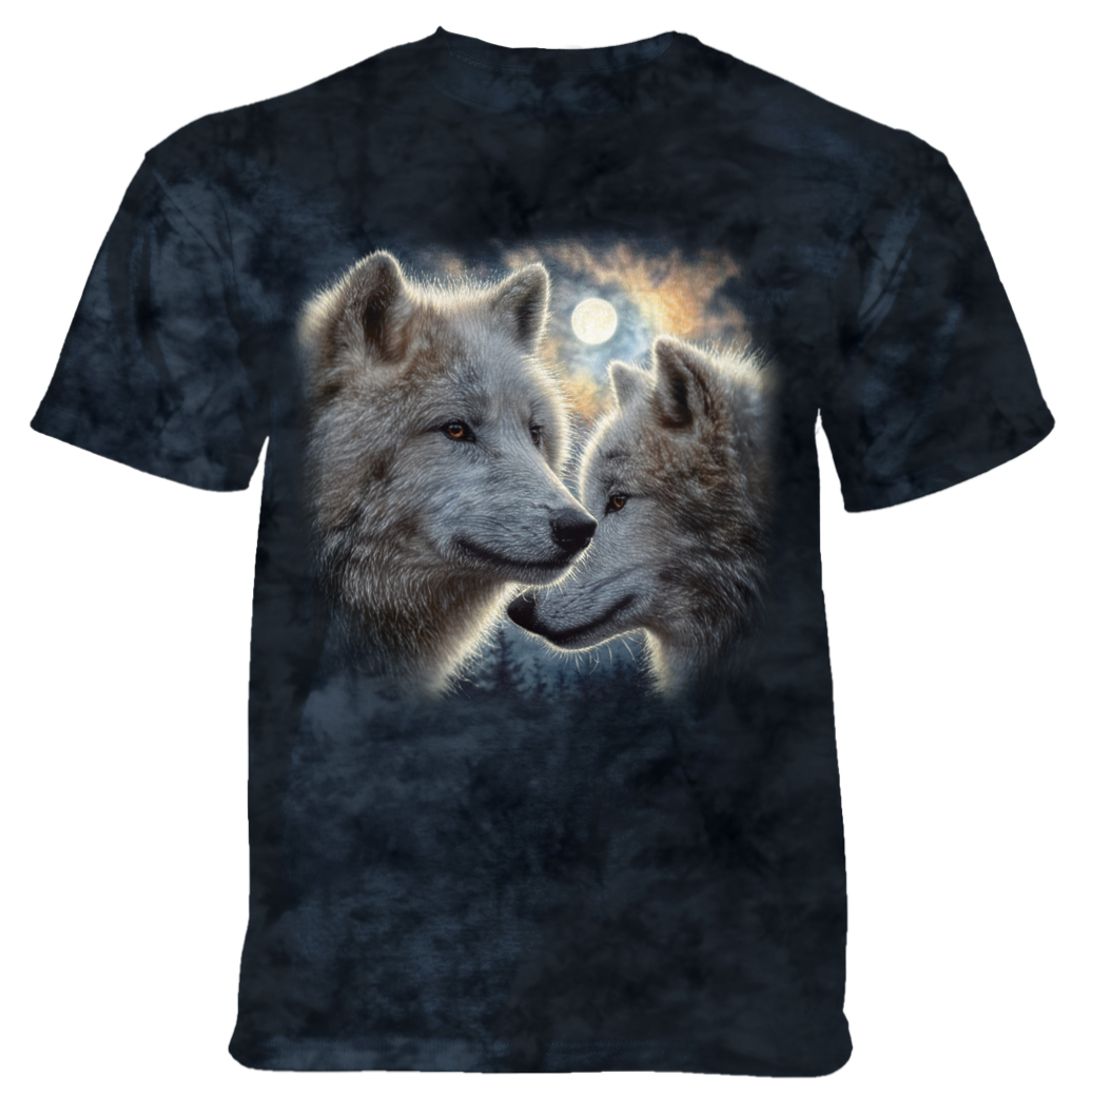 The Mountain T-Shirt - Moonlit Wolf Mates